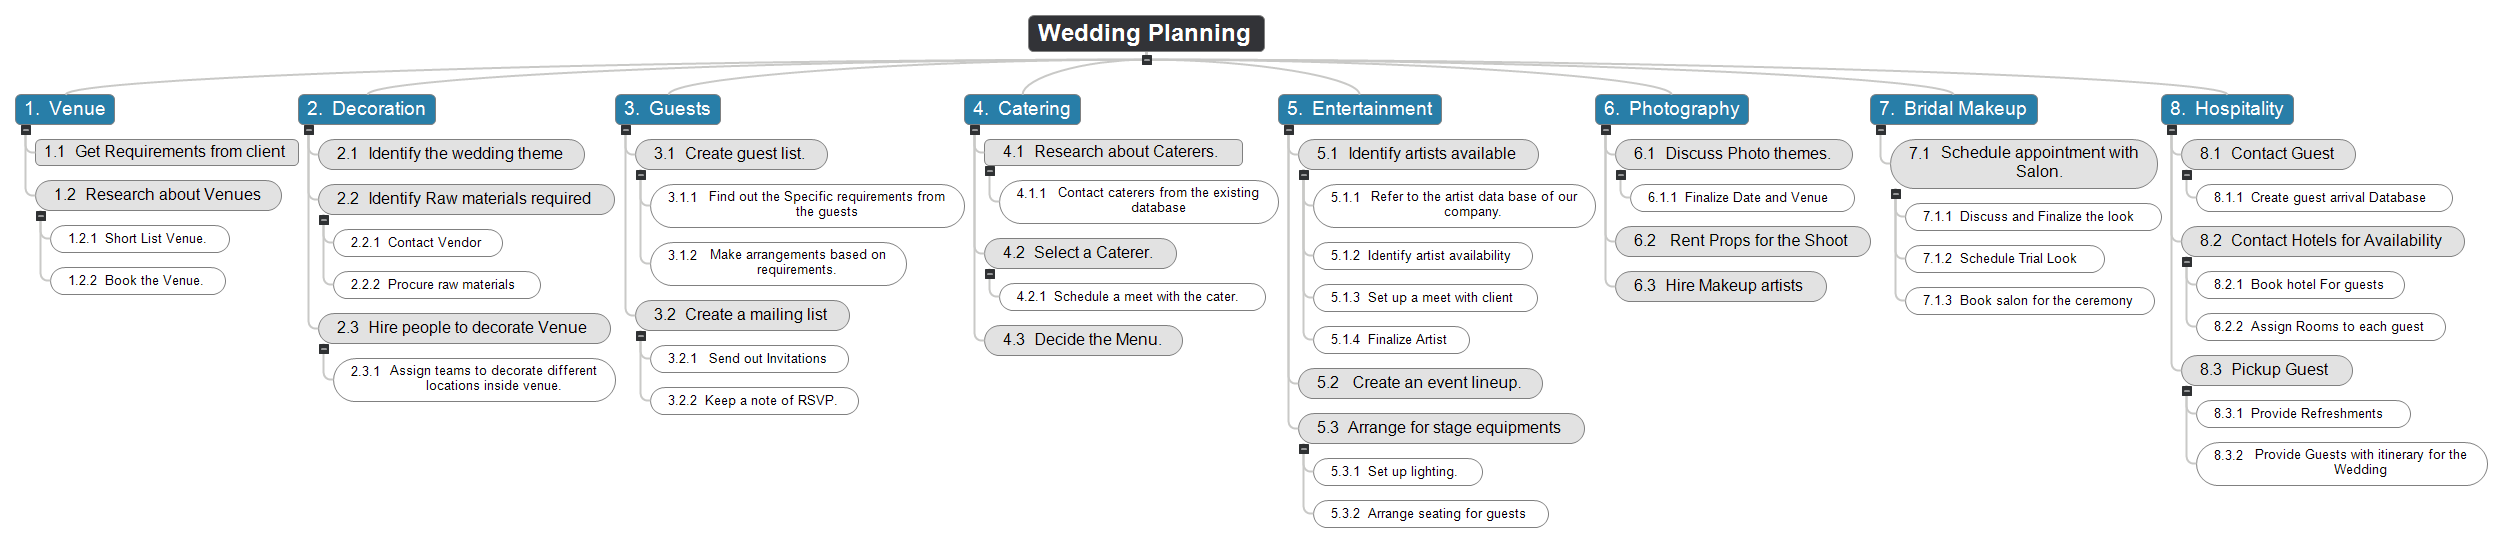 Wedding Planning WBS